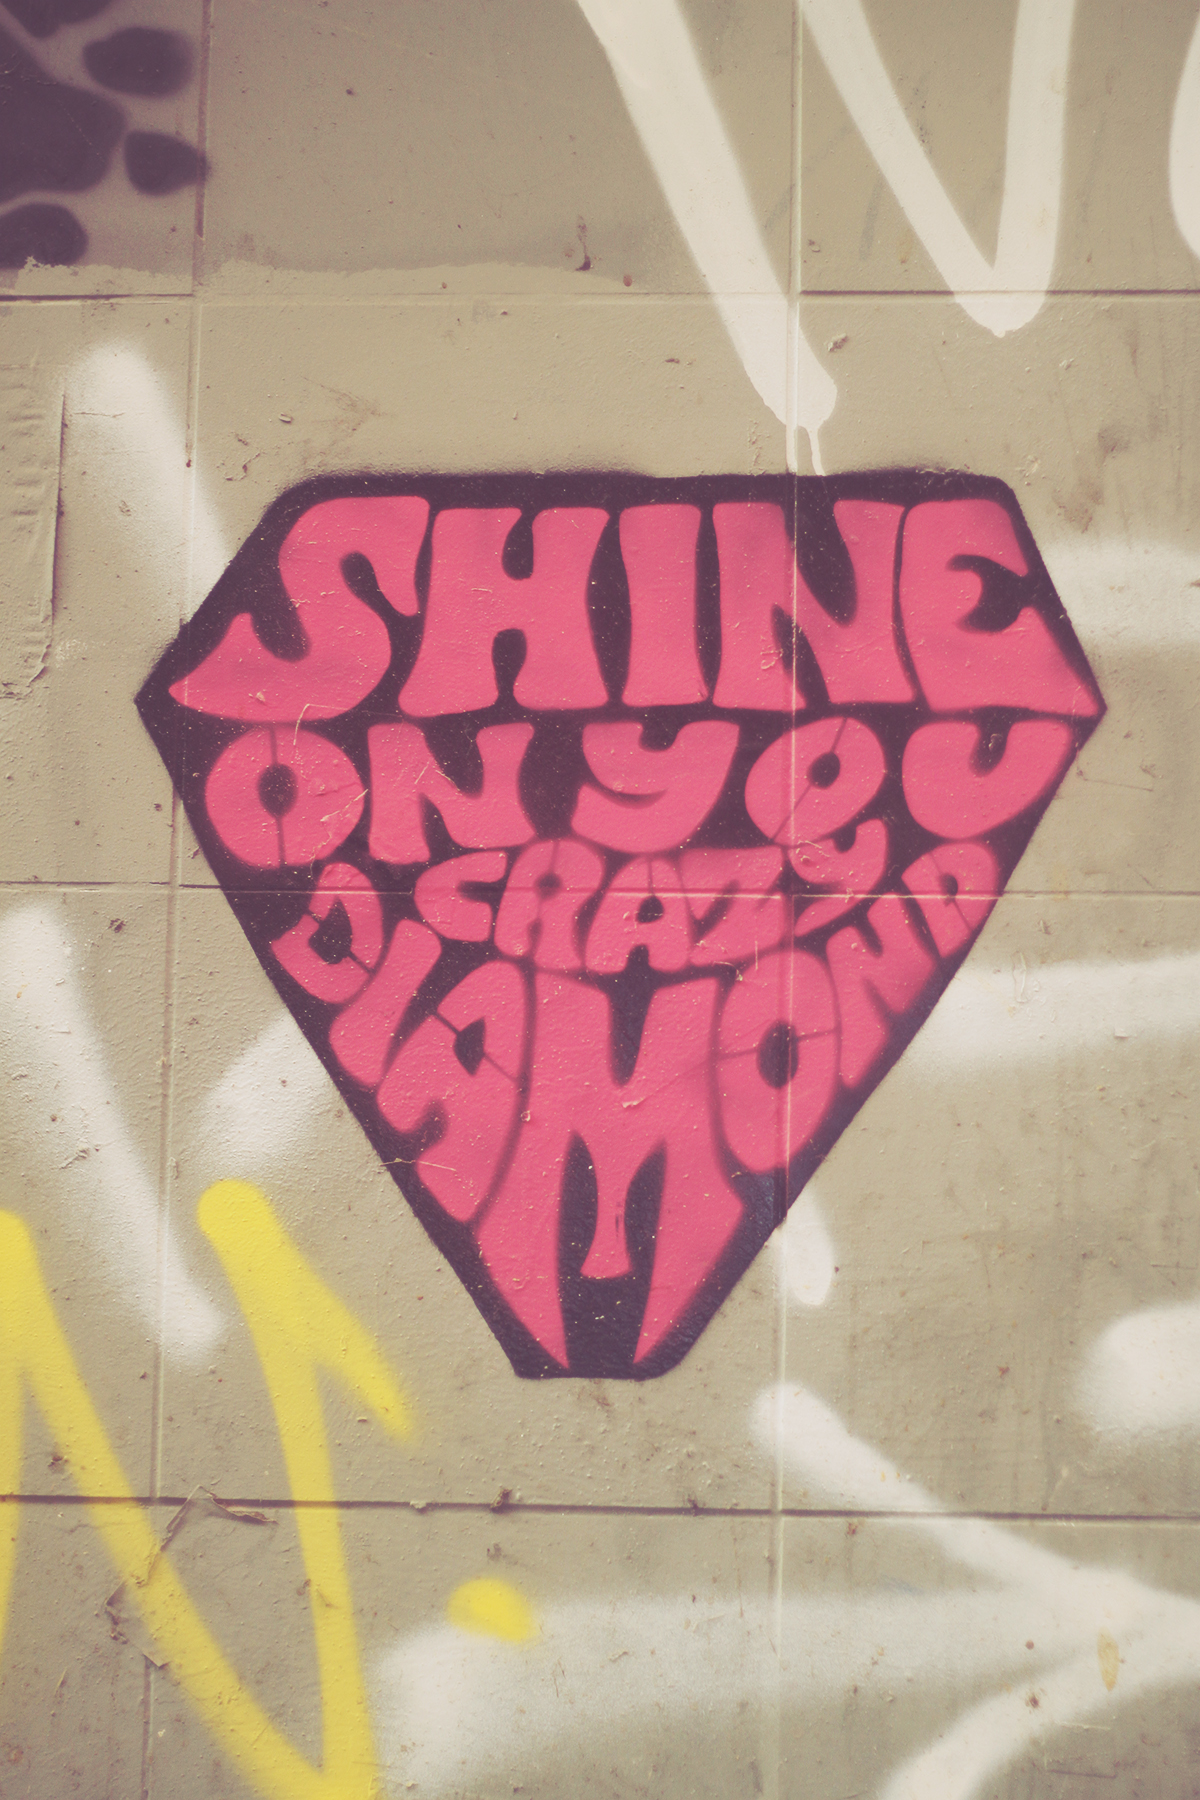 istanbul_graffiti shine on you crazy dimond